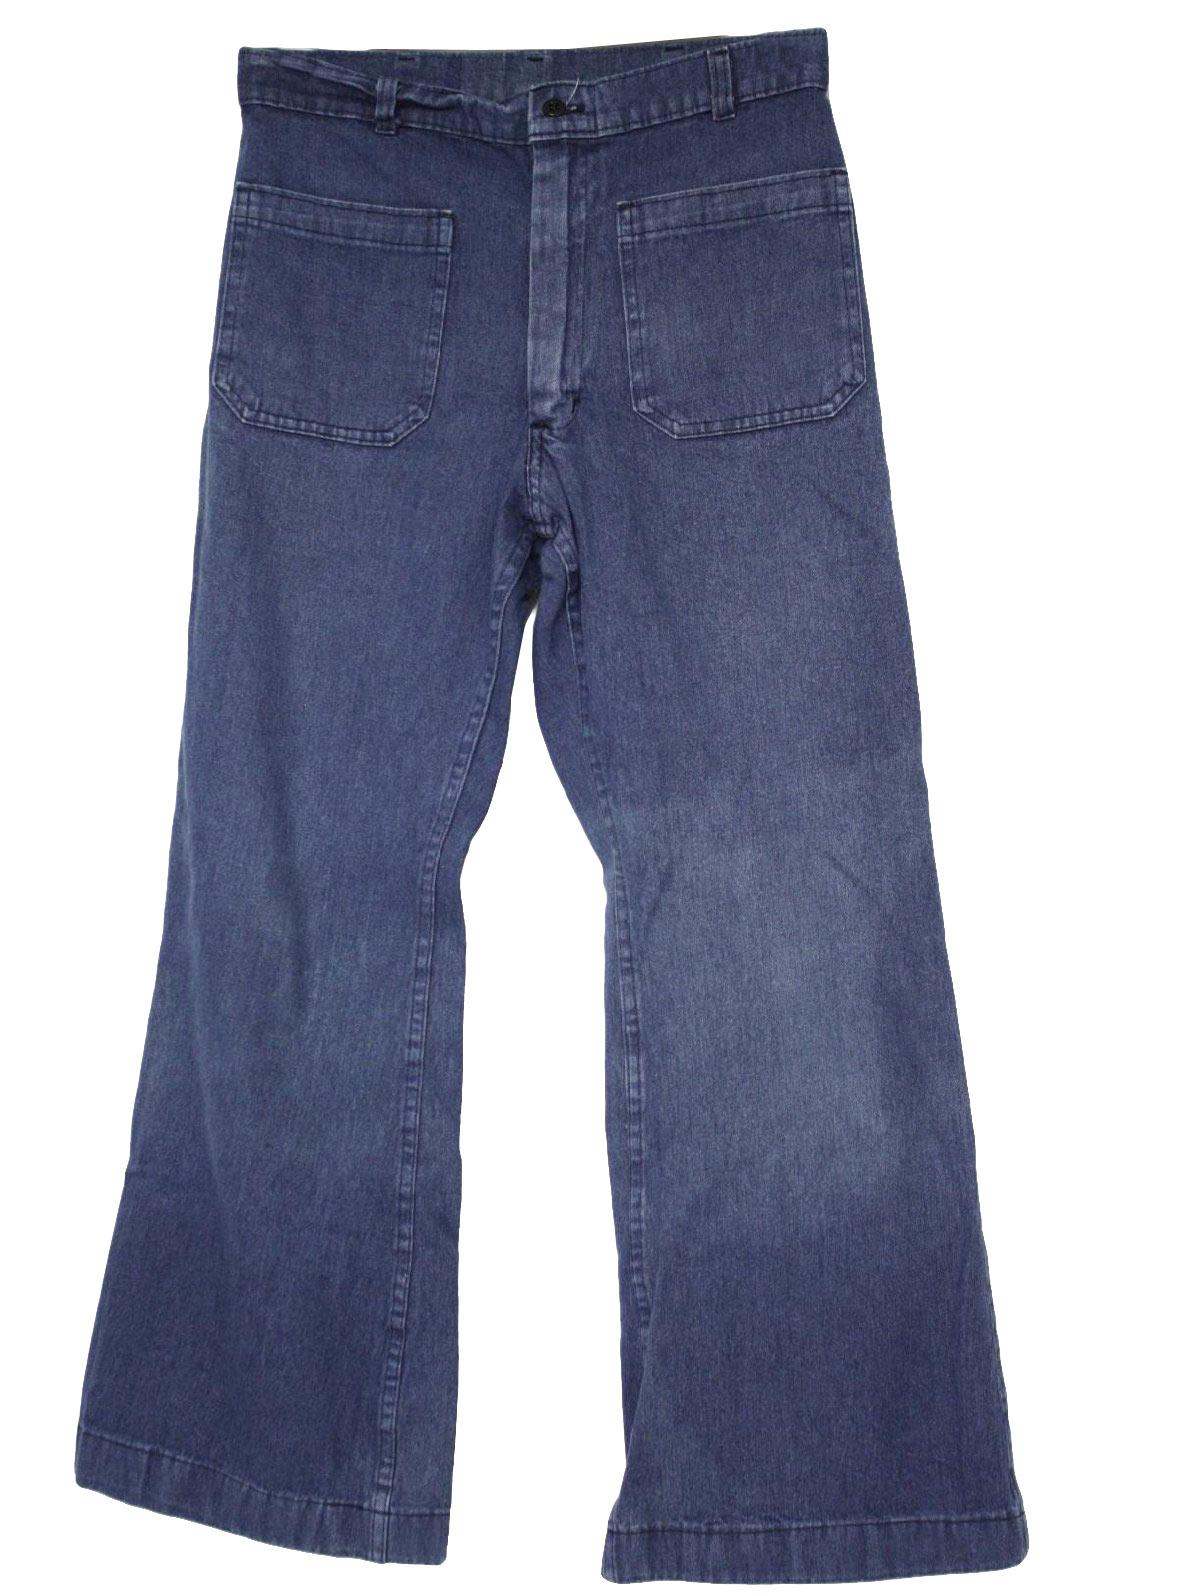 Vintage 1970's Bellbottom Pants: 70s -Navdungaree- Mens faded blue ...